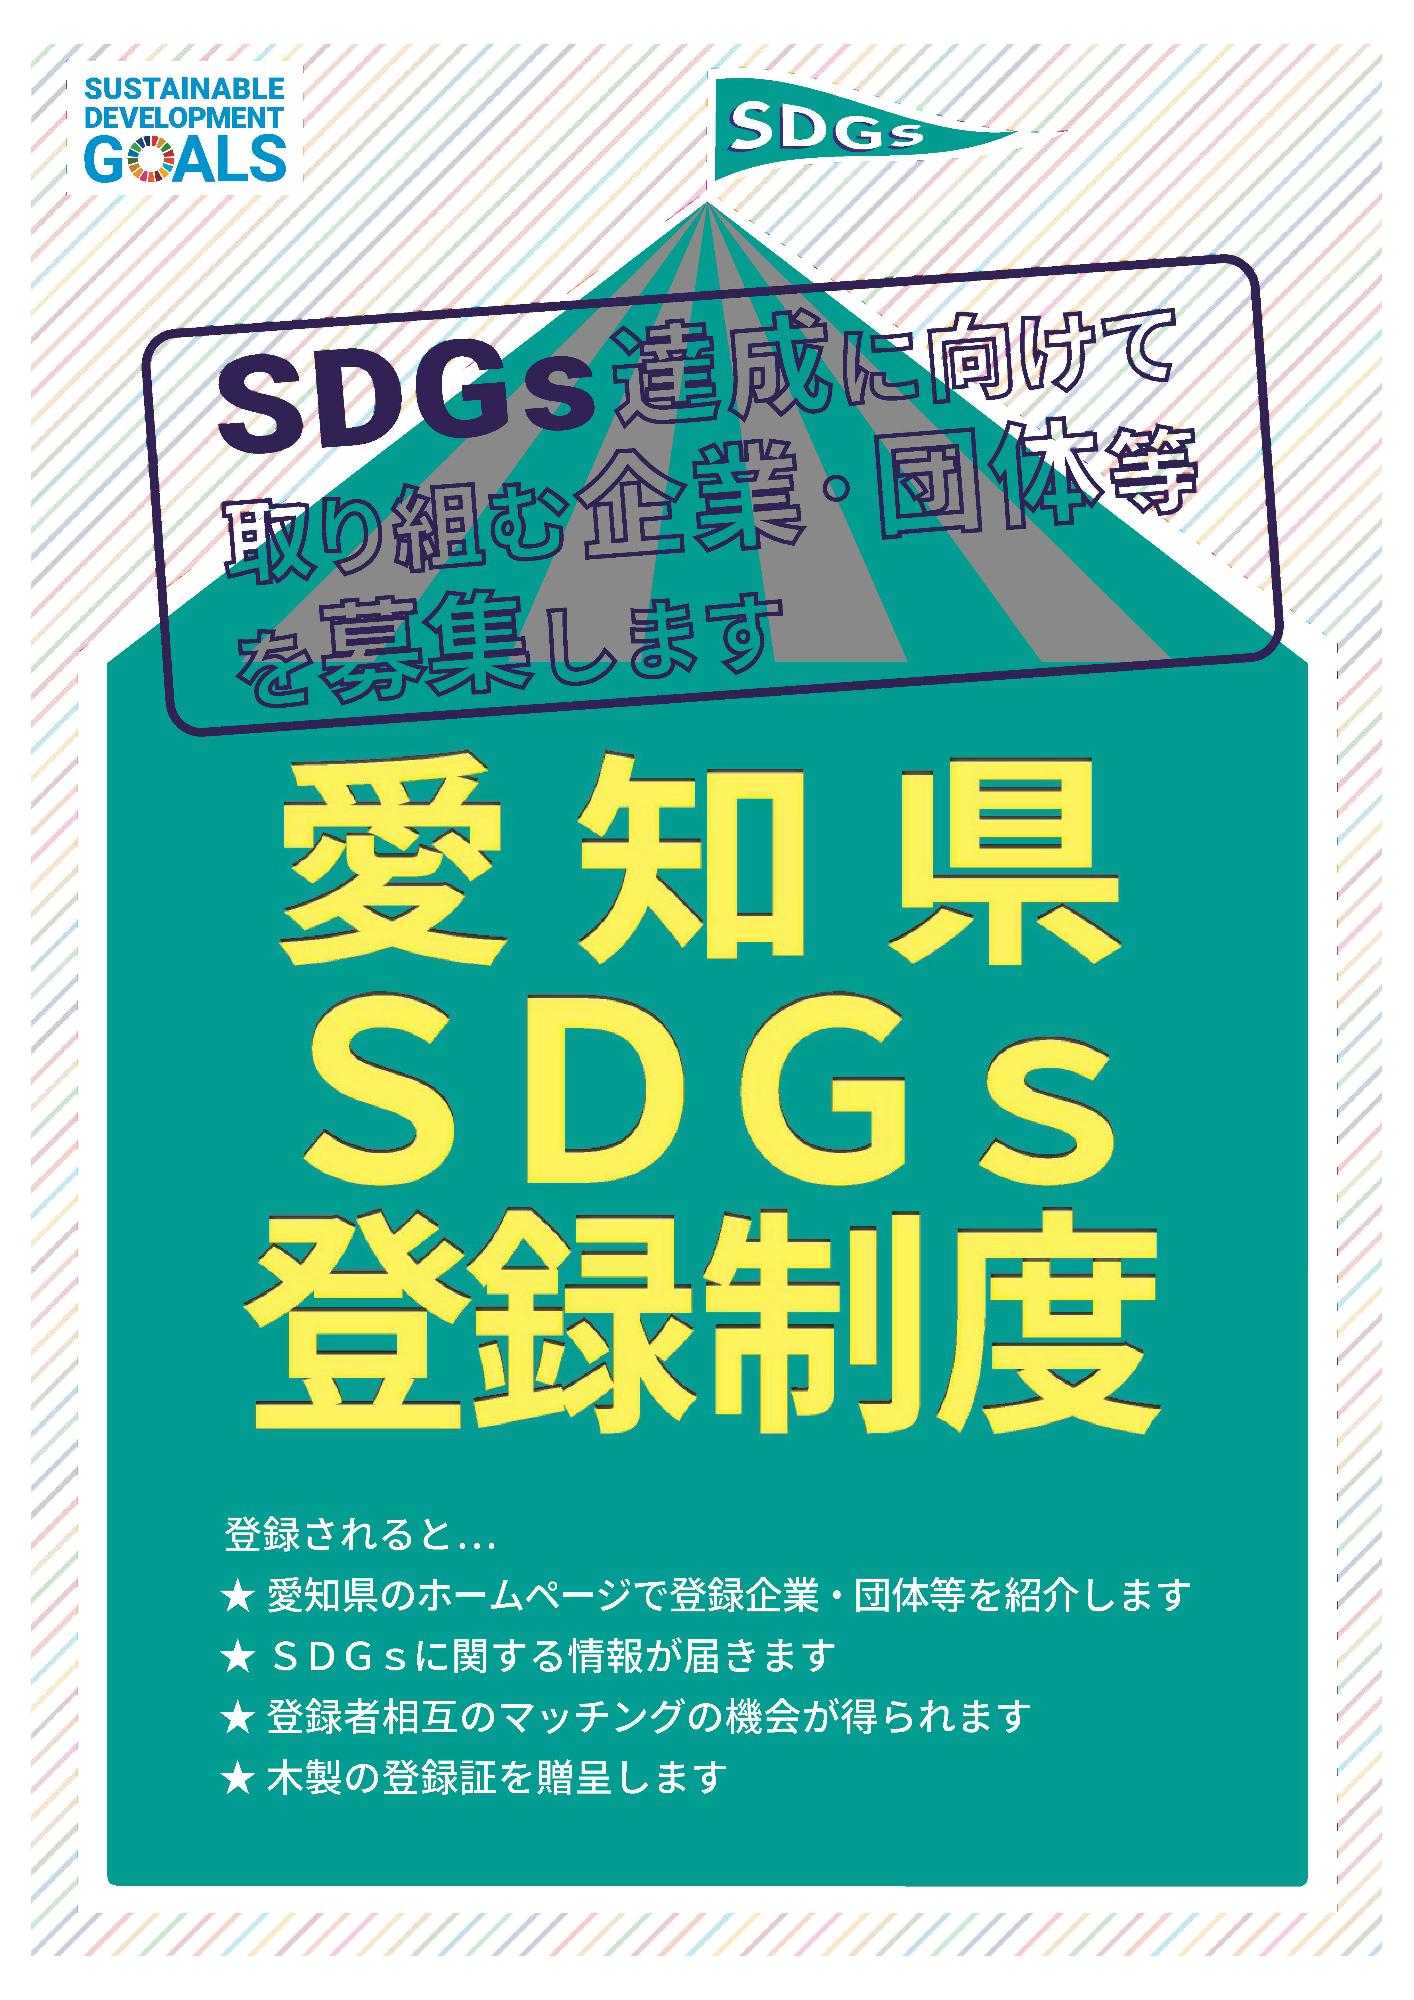 愛知県SDGs登録制度チラシ1枚目